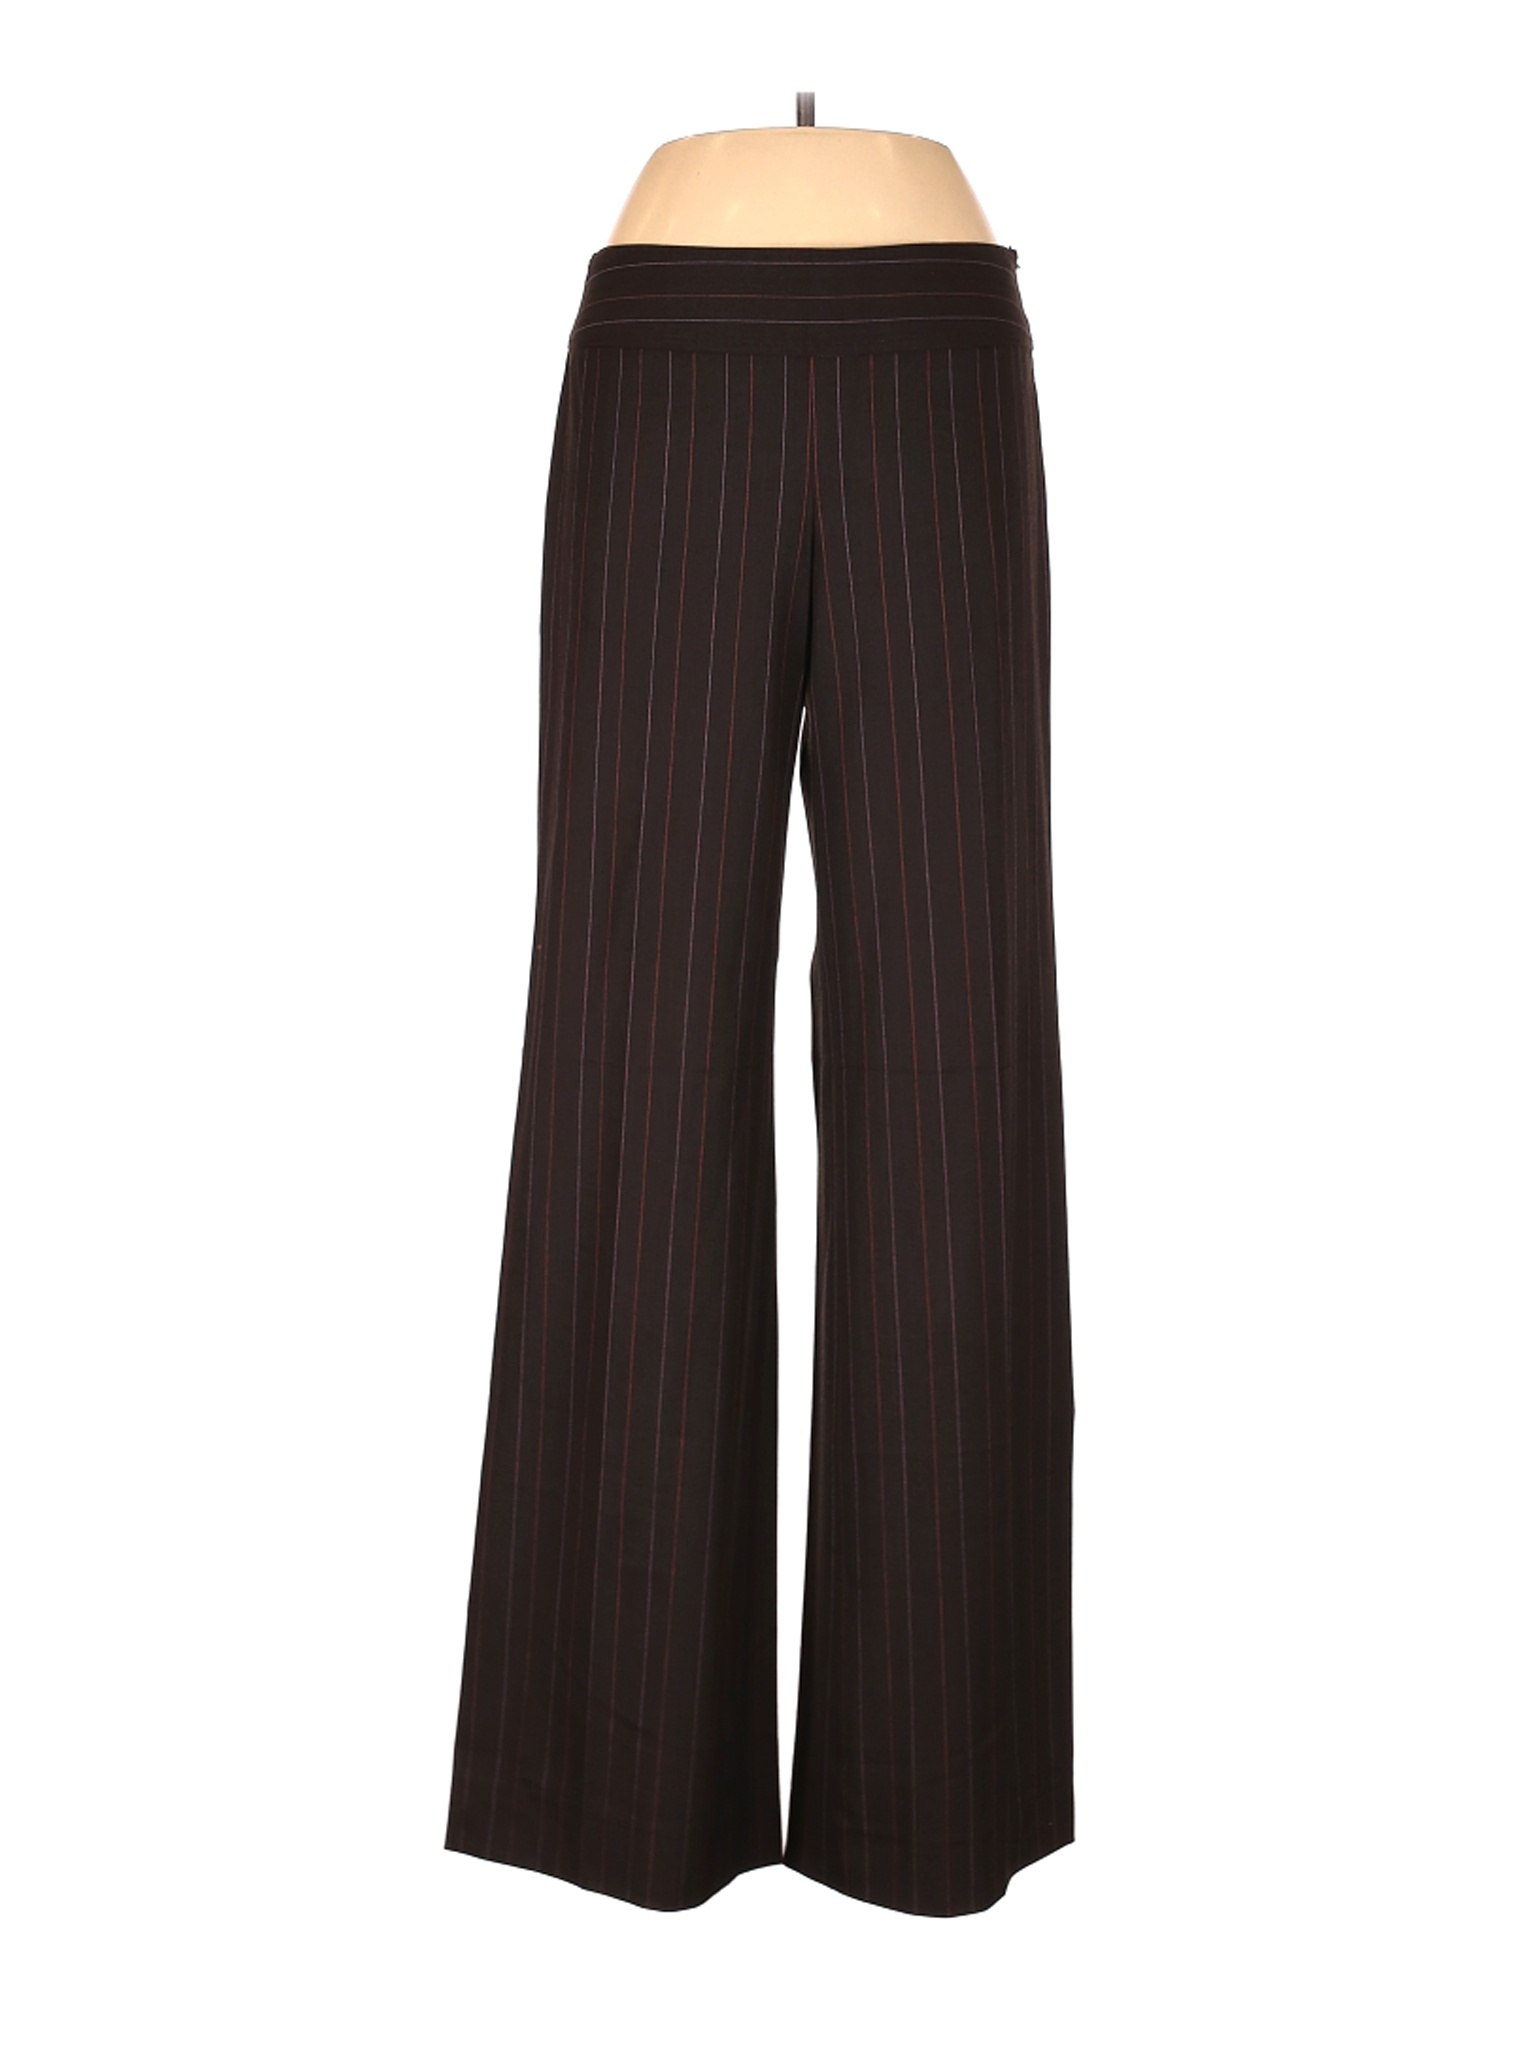 The Limited Women Brown Dress Pants 6 | eBay